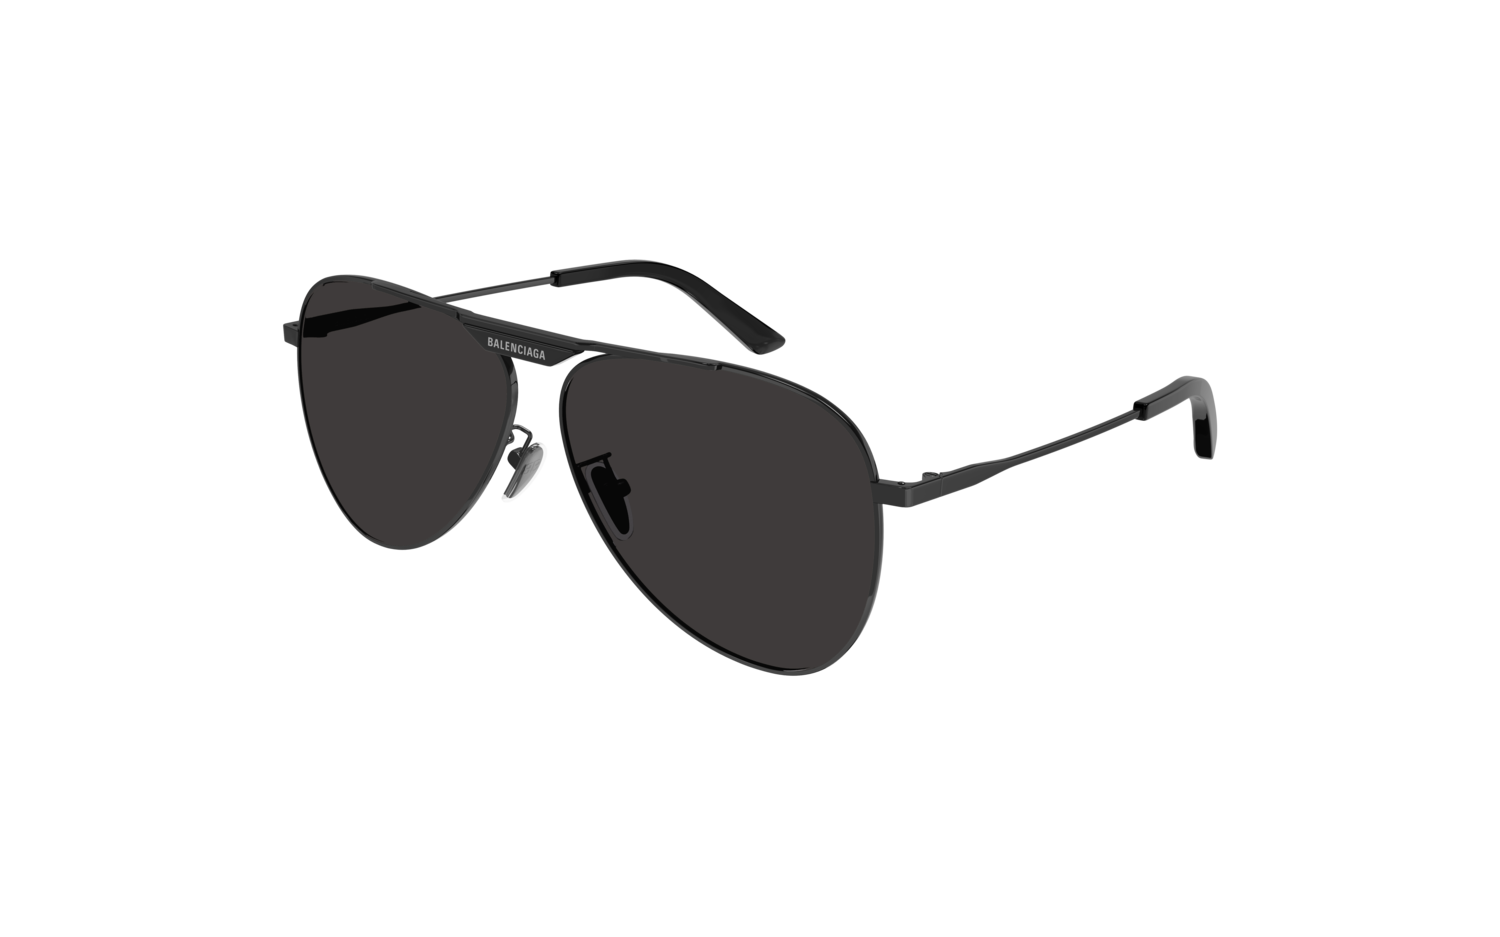 Balenciaga Sunglasses BB0244S 001 62fw1500fh937.5